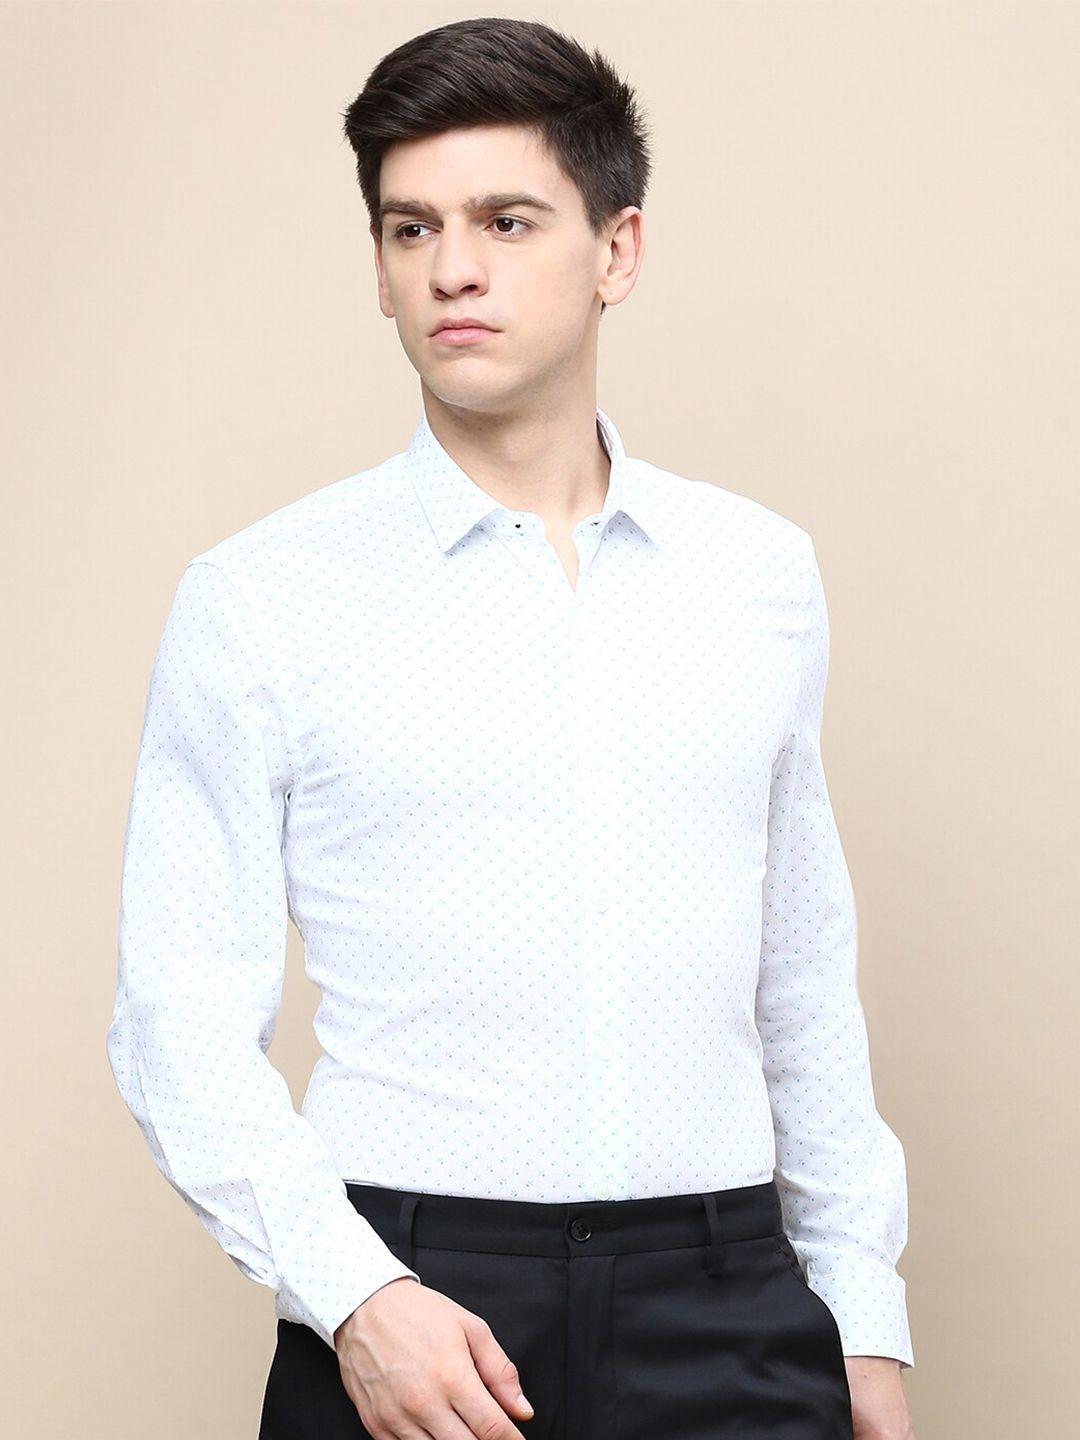 invictus polka dot printed standard slim fit opaque cotton formal shirt